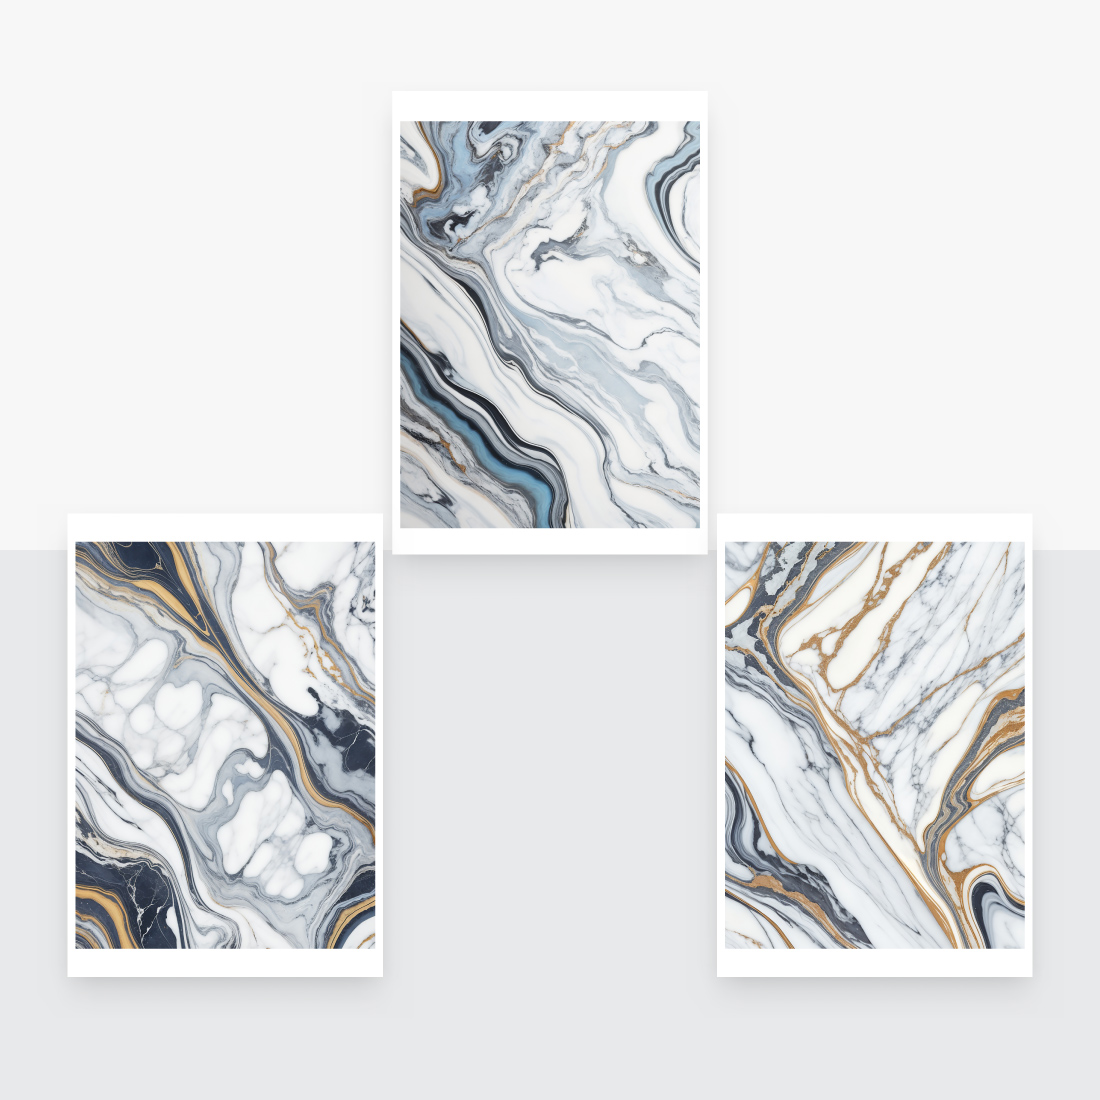 Liquid Marble Digital paper texture preview image.